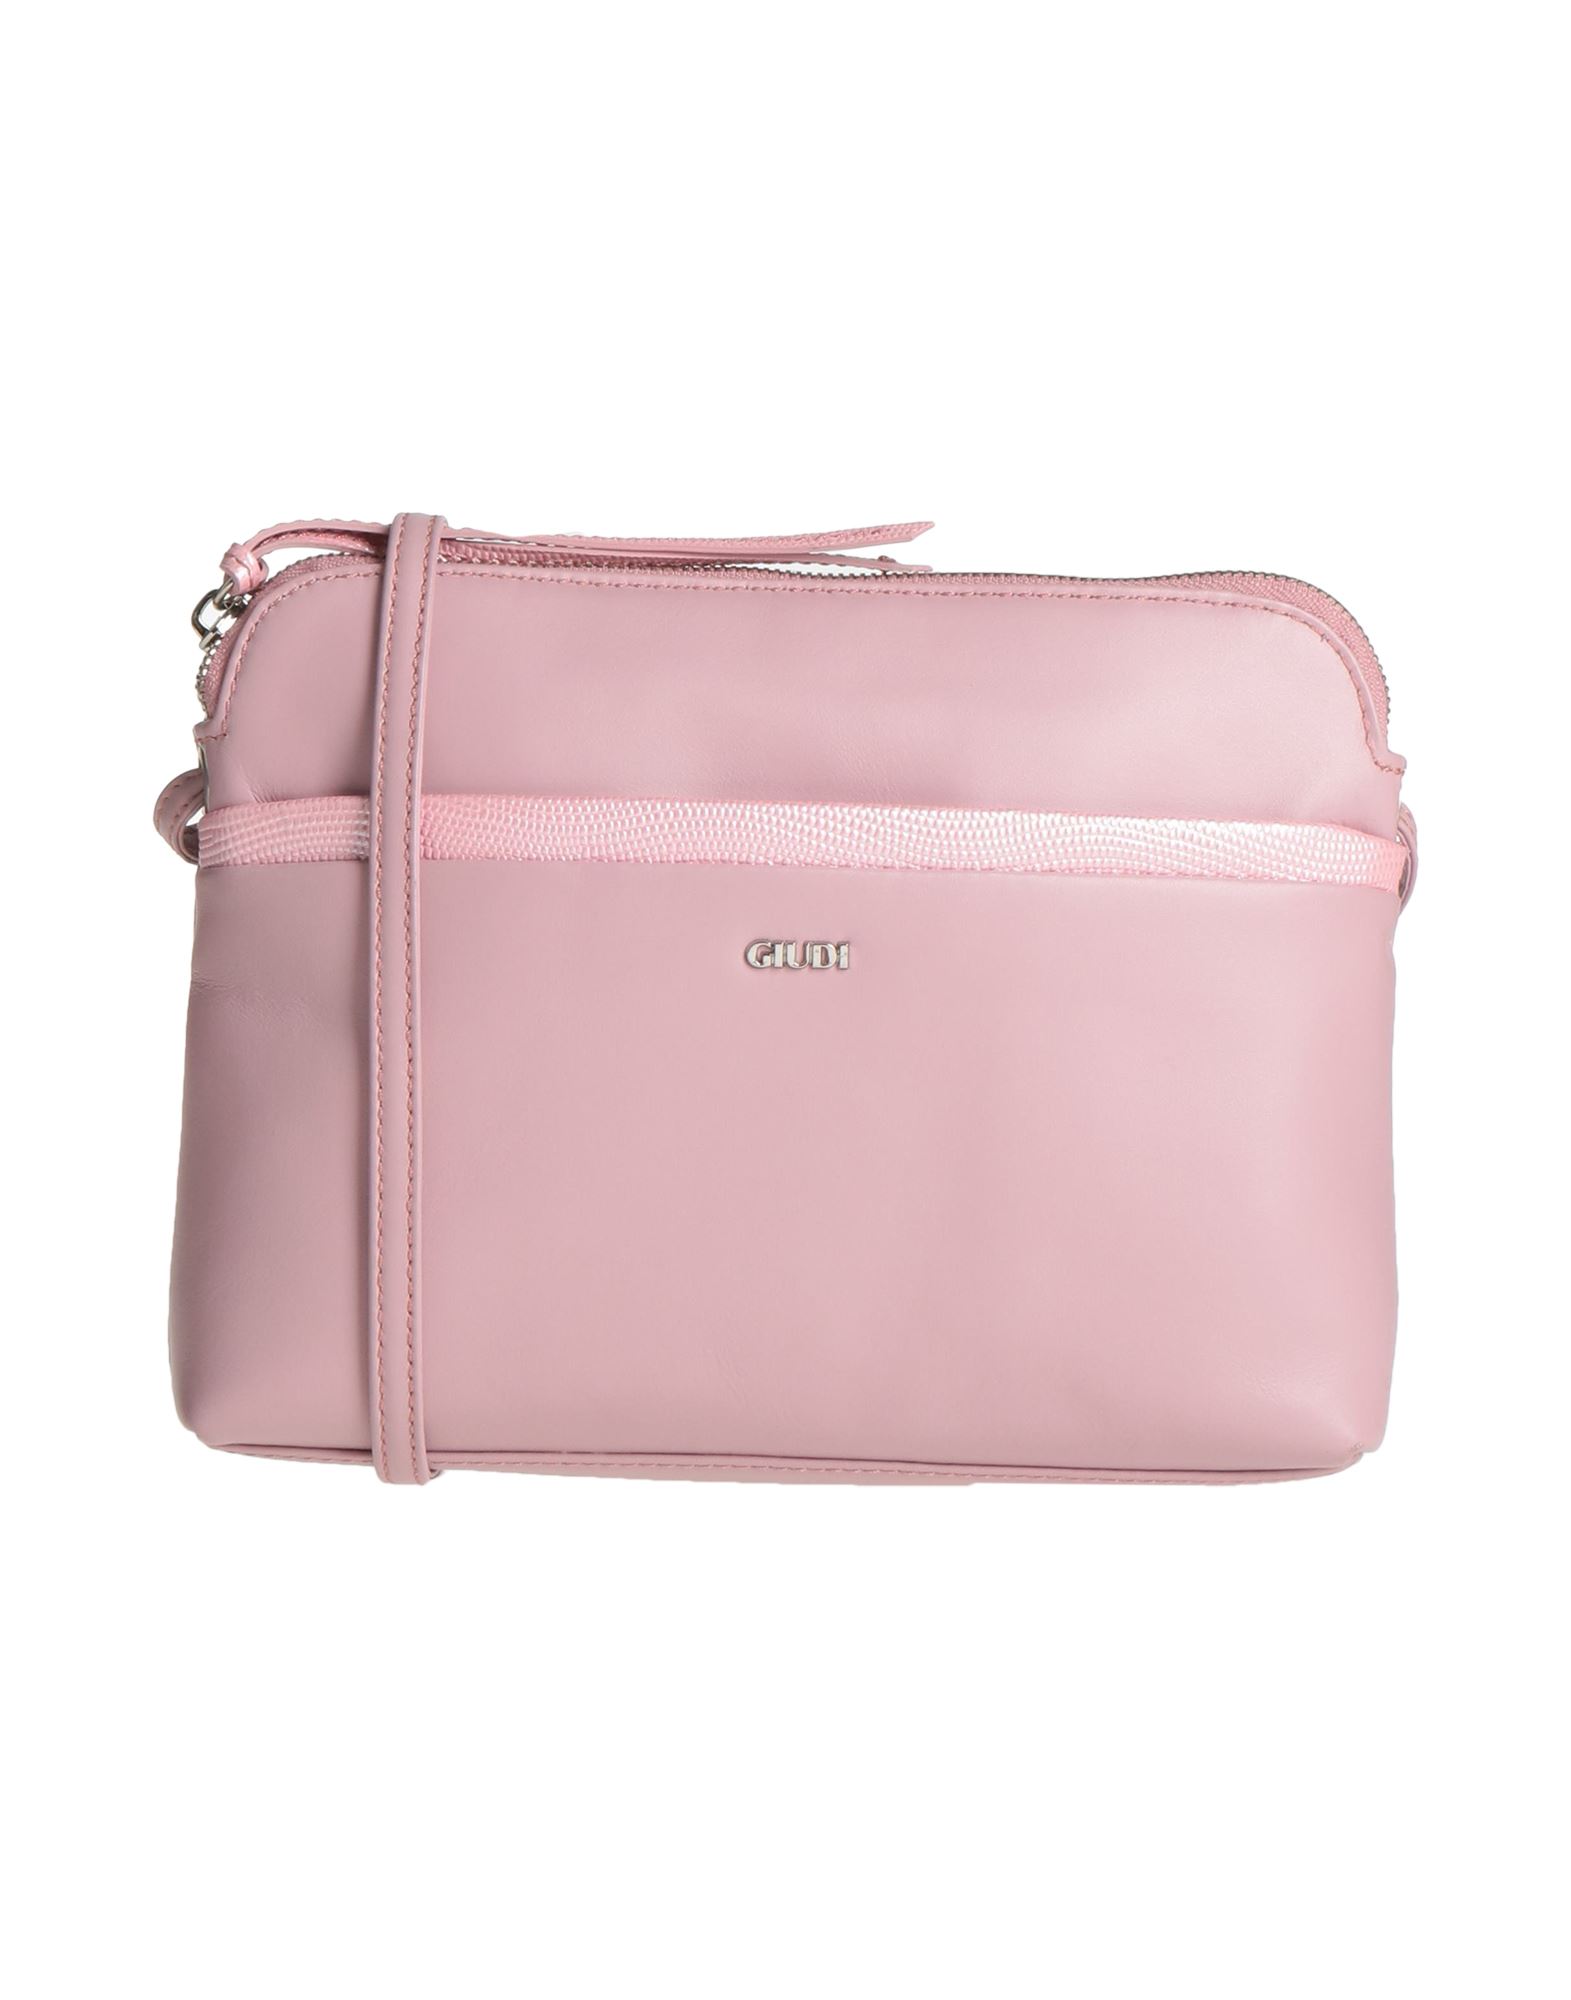 Giudi Handbags In Pink